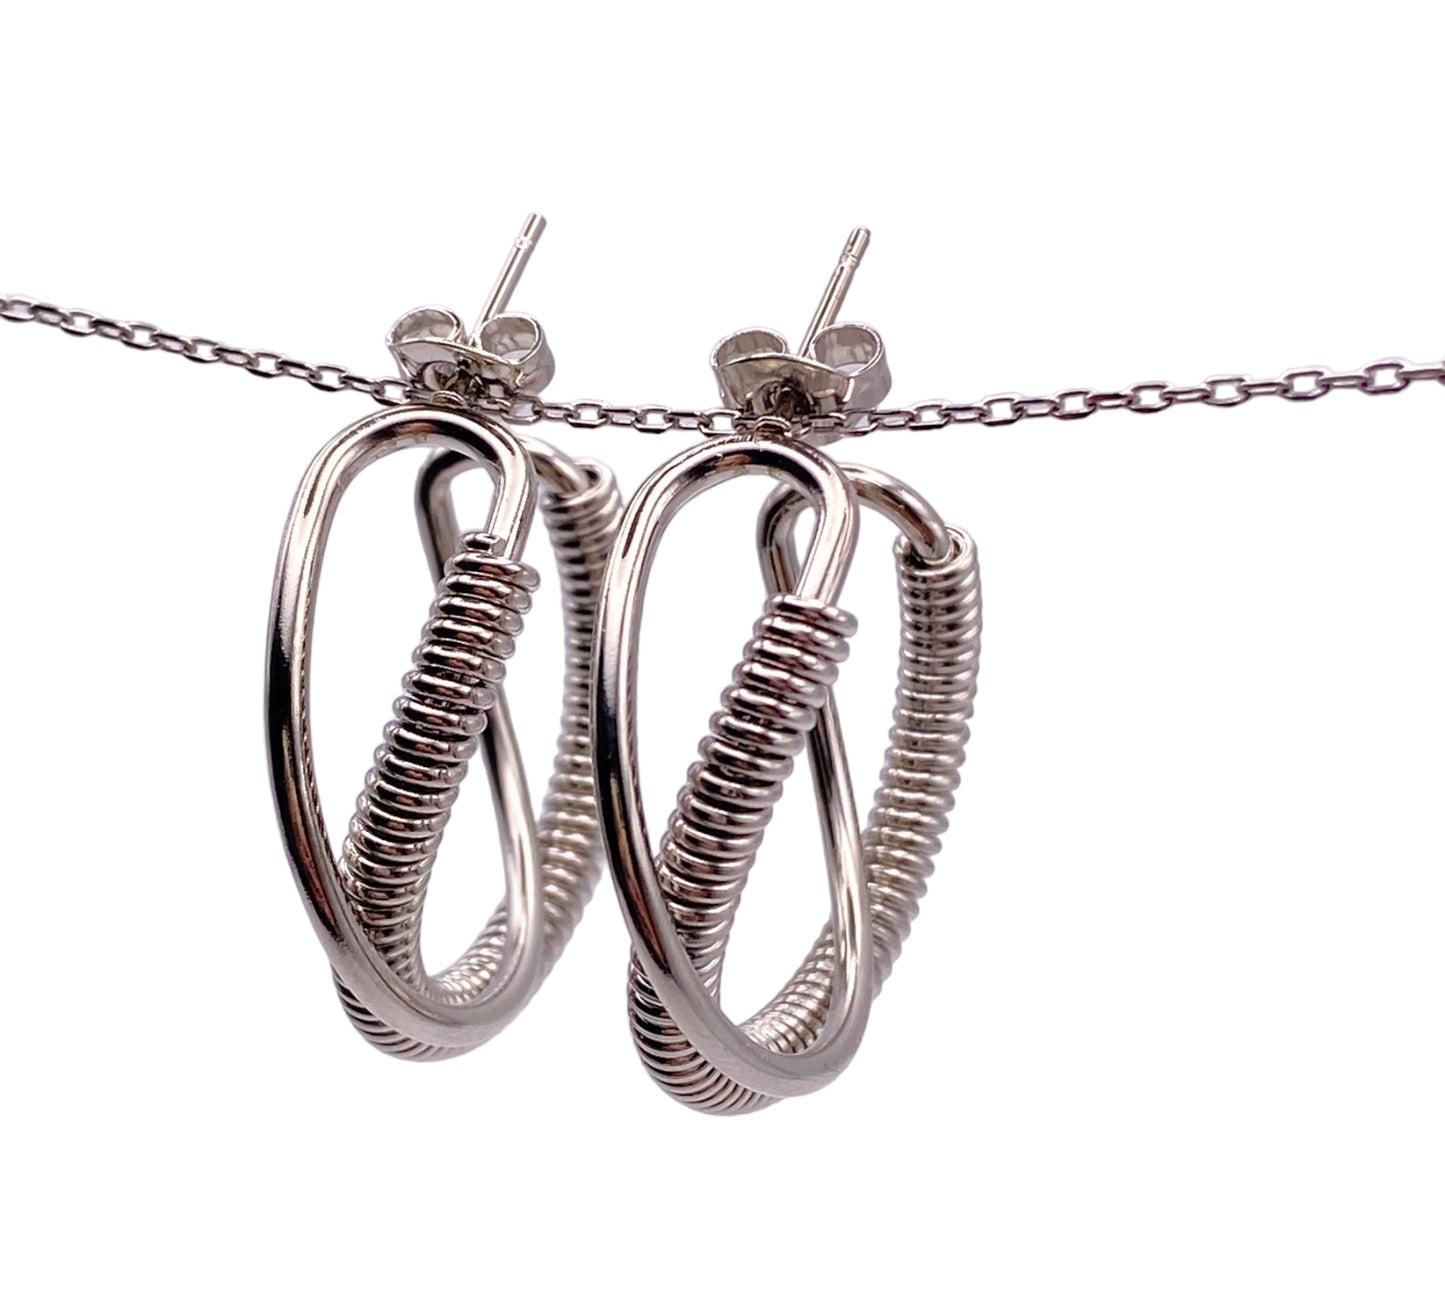 "VELVET" silver colored double open hoops